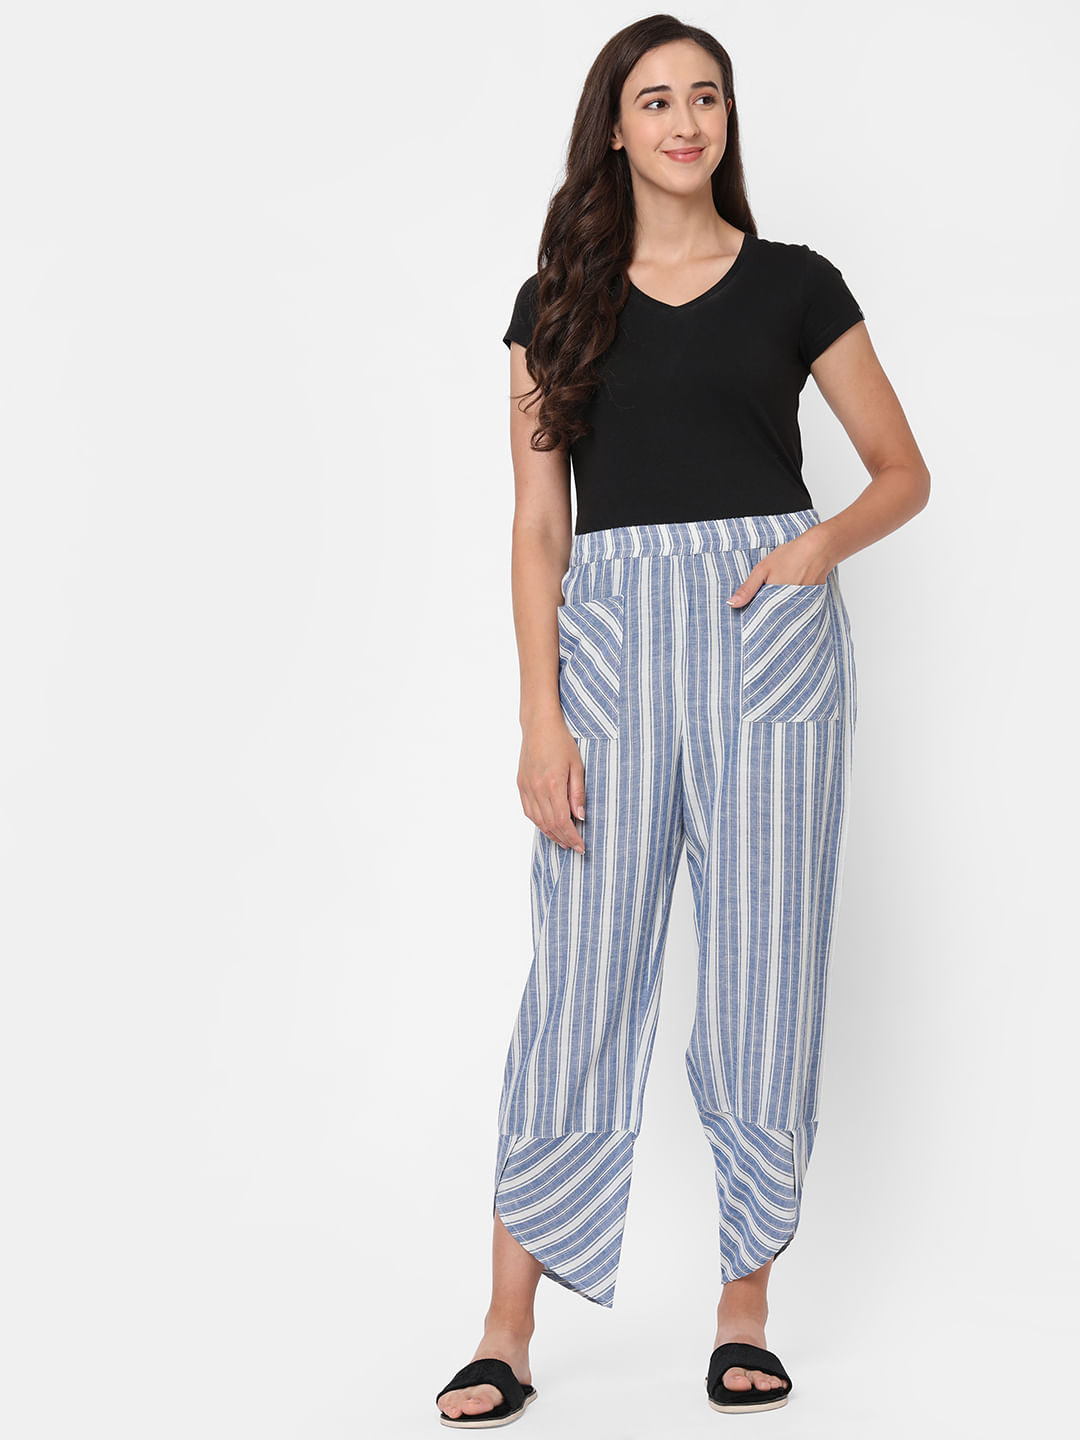 Vera Bradley Pajama Pants : Target